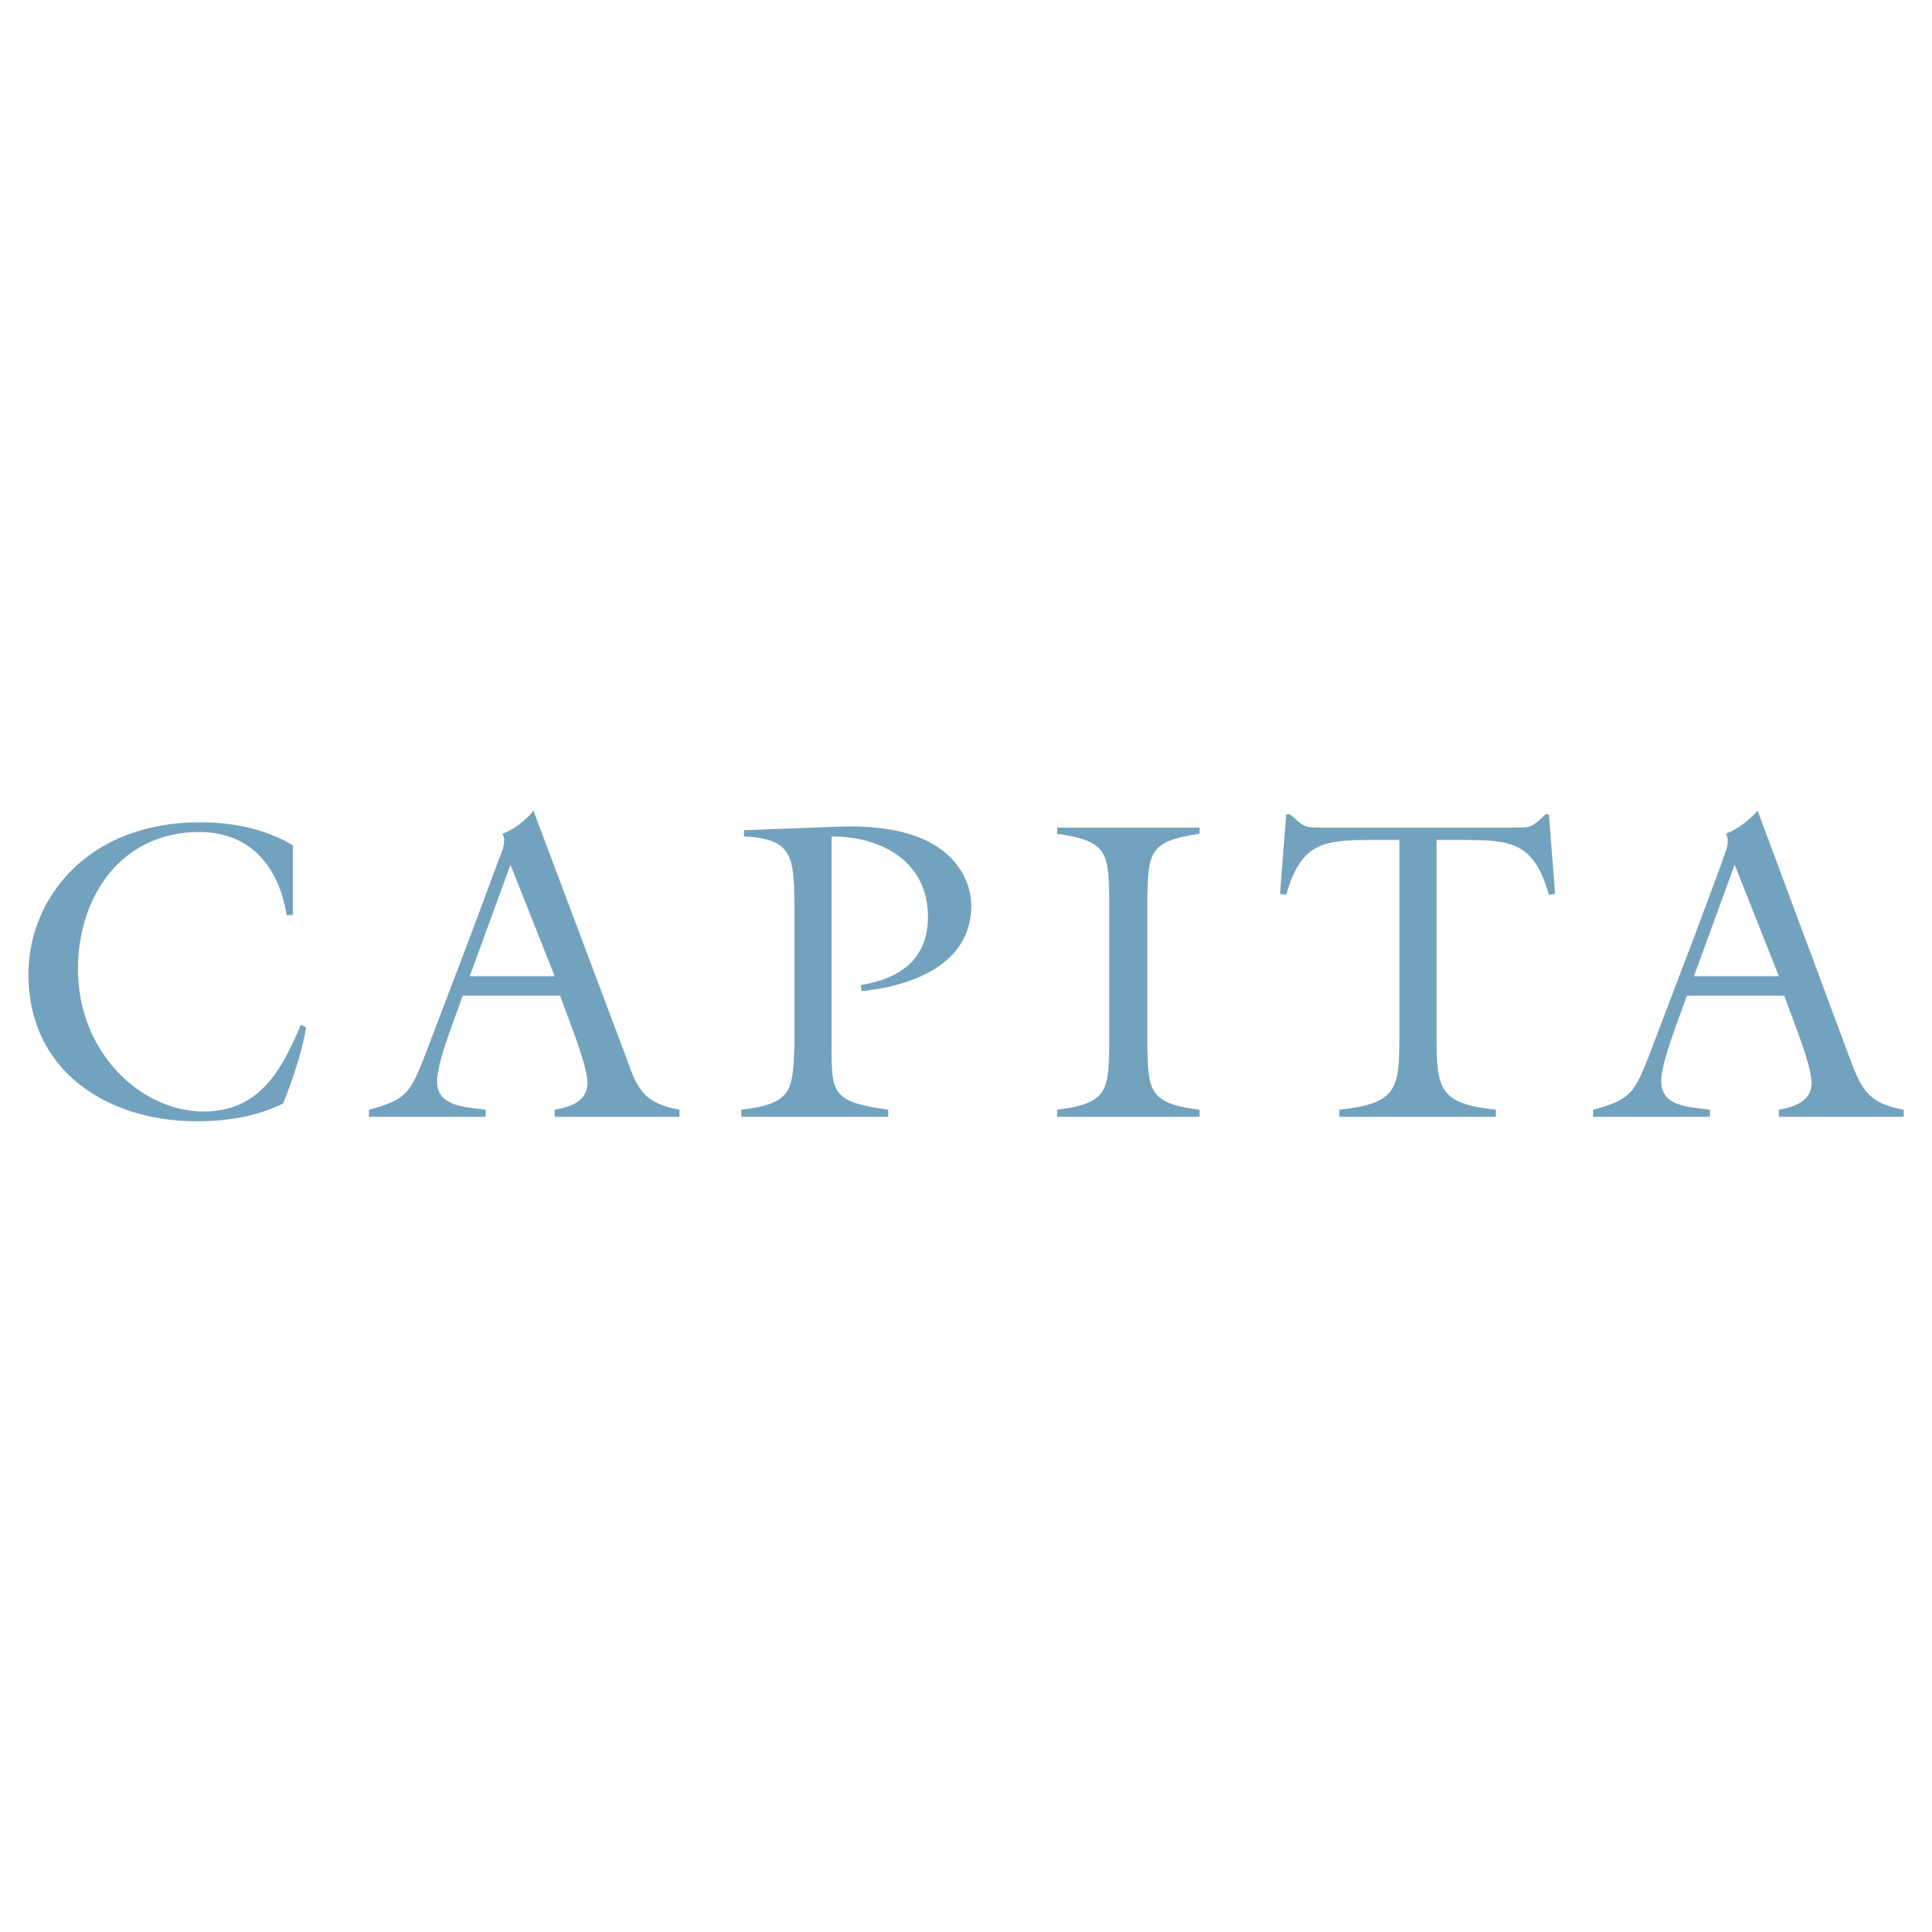 Capita Logo - Capita Logo PNG Transparent & SVG Vector - Freebie Supply